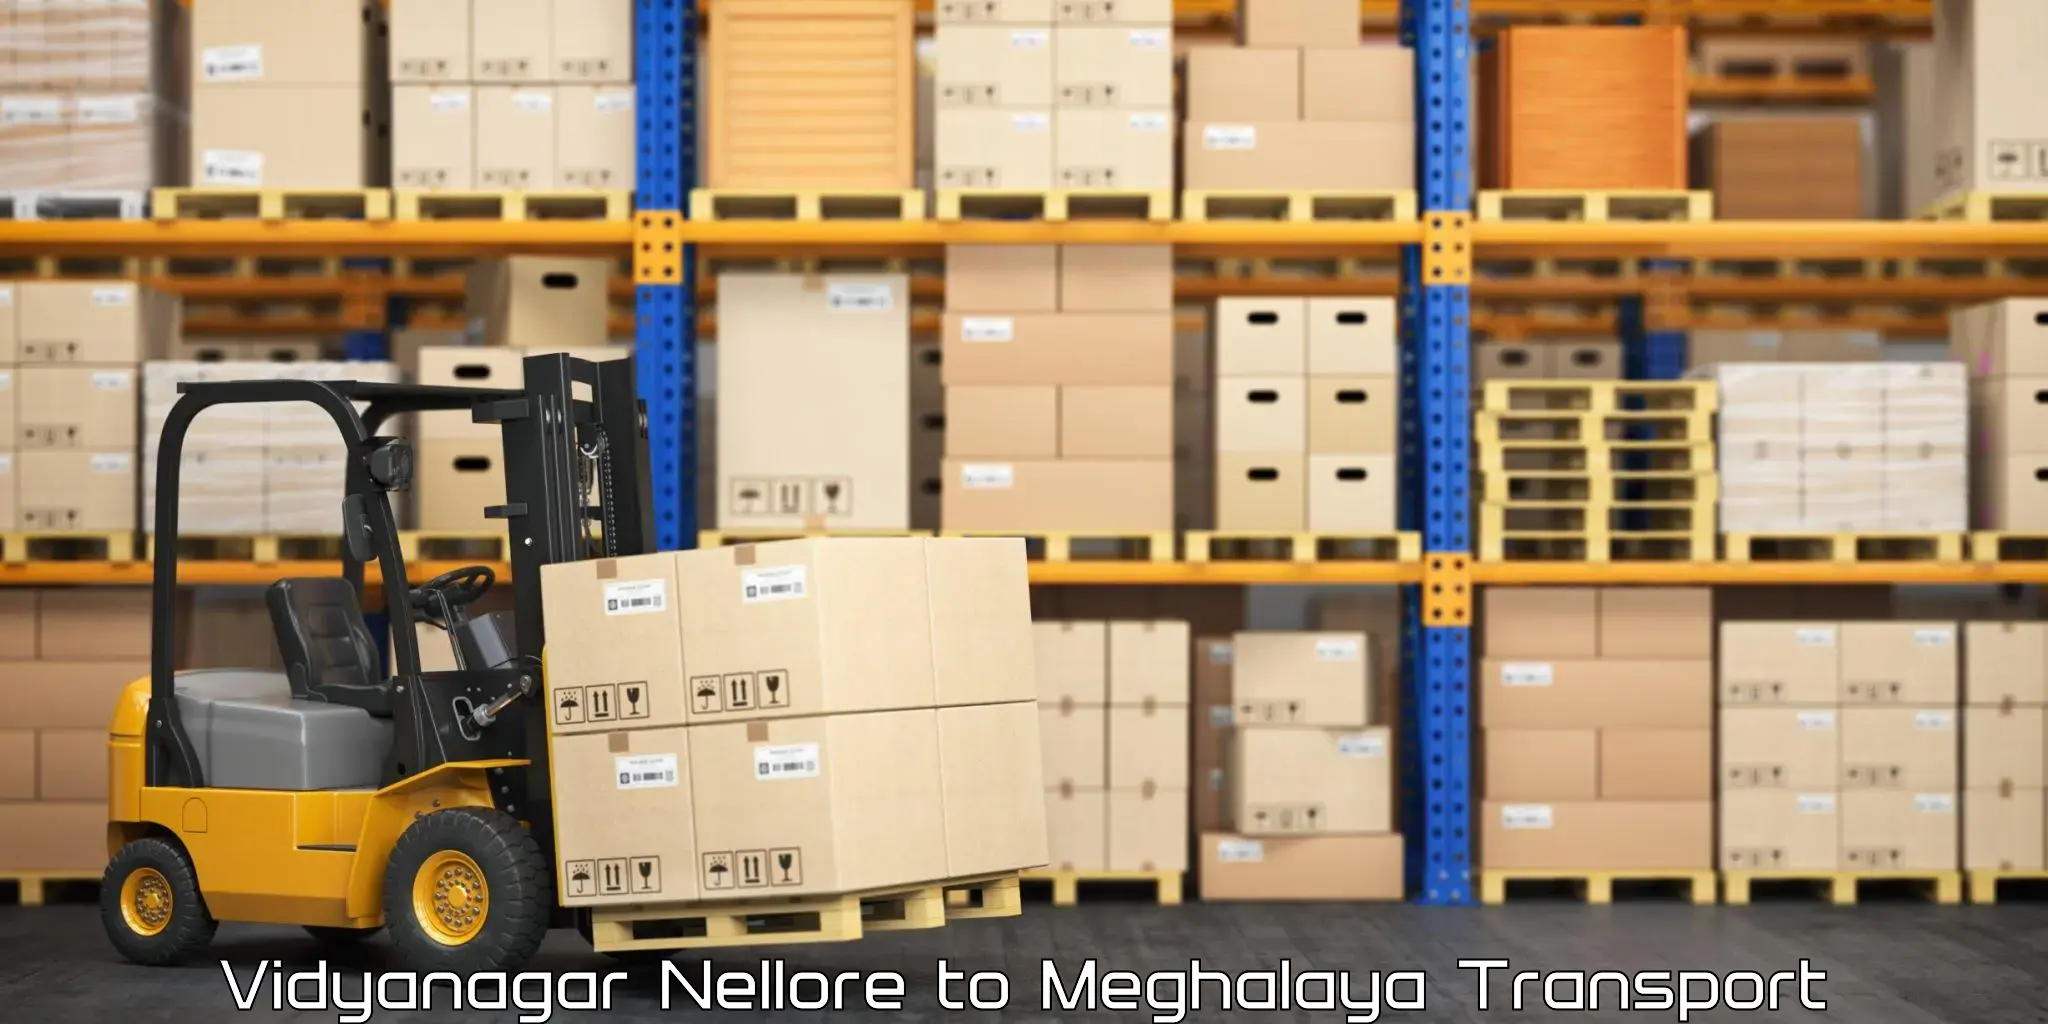 Container transport service Vidyanagar Nellore to Nongstoin